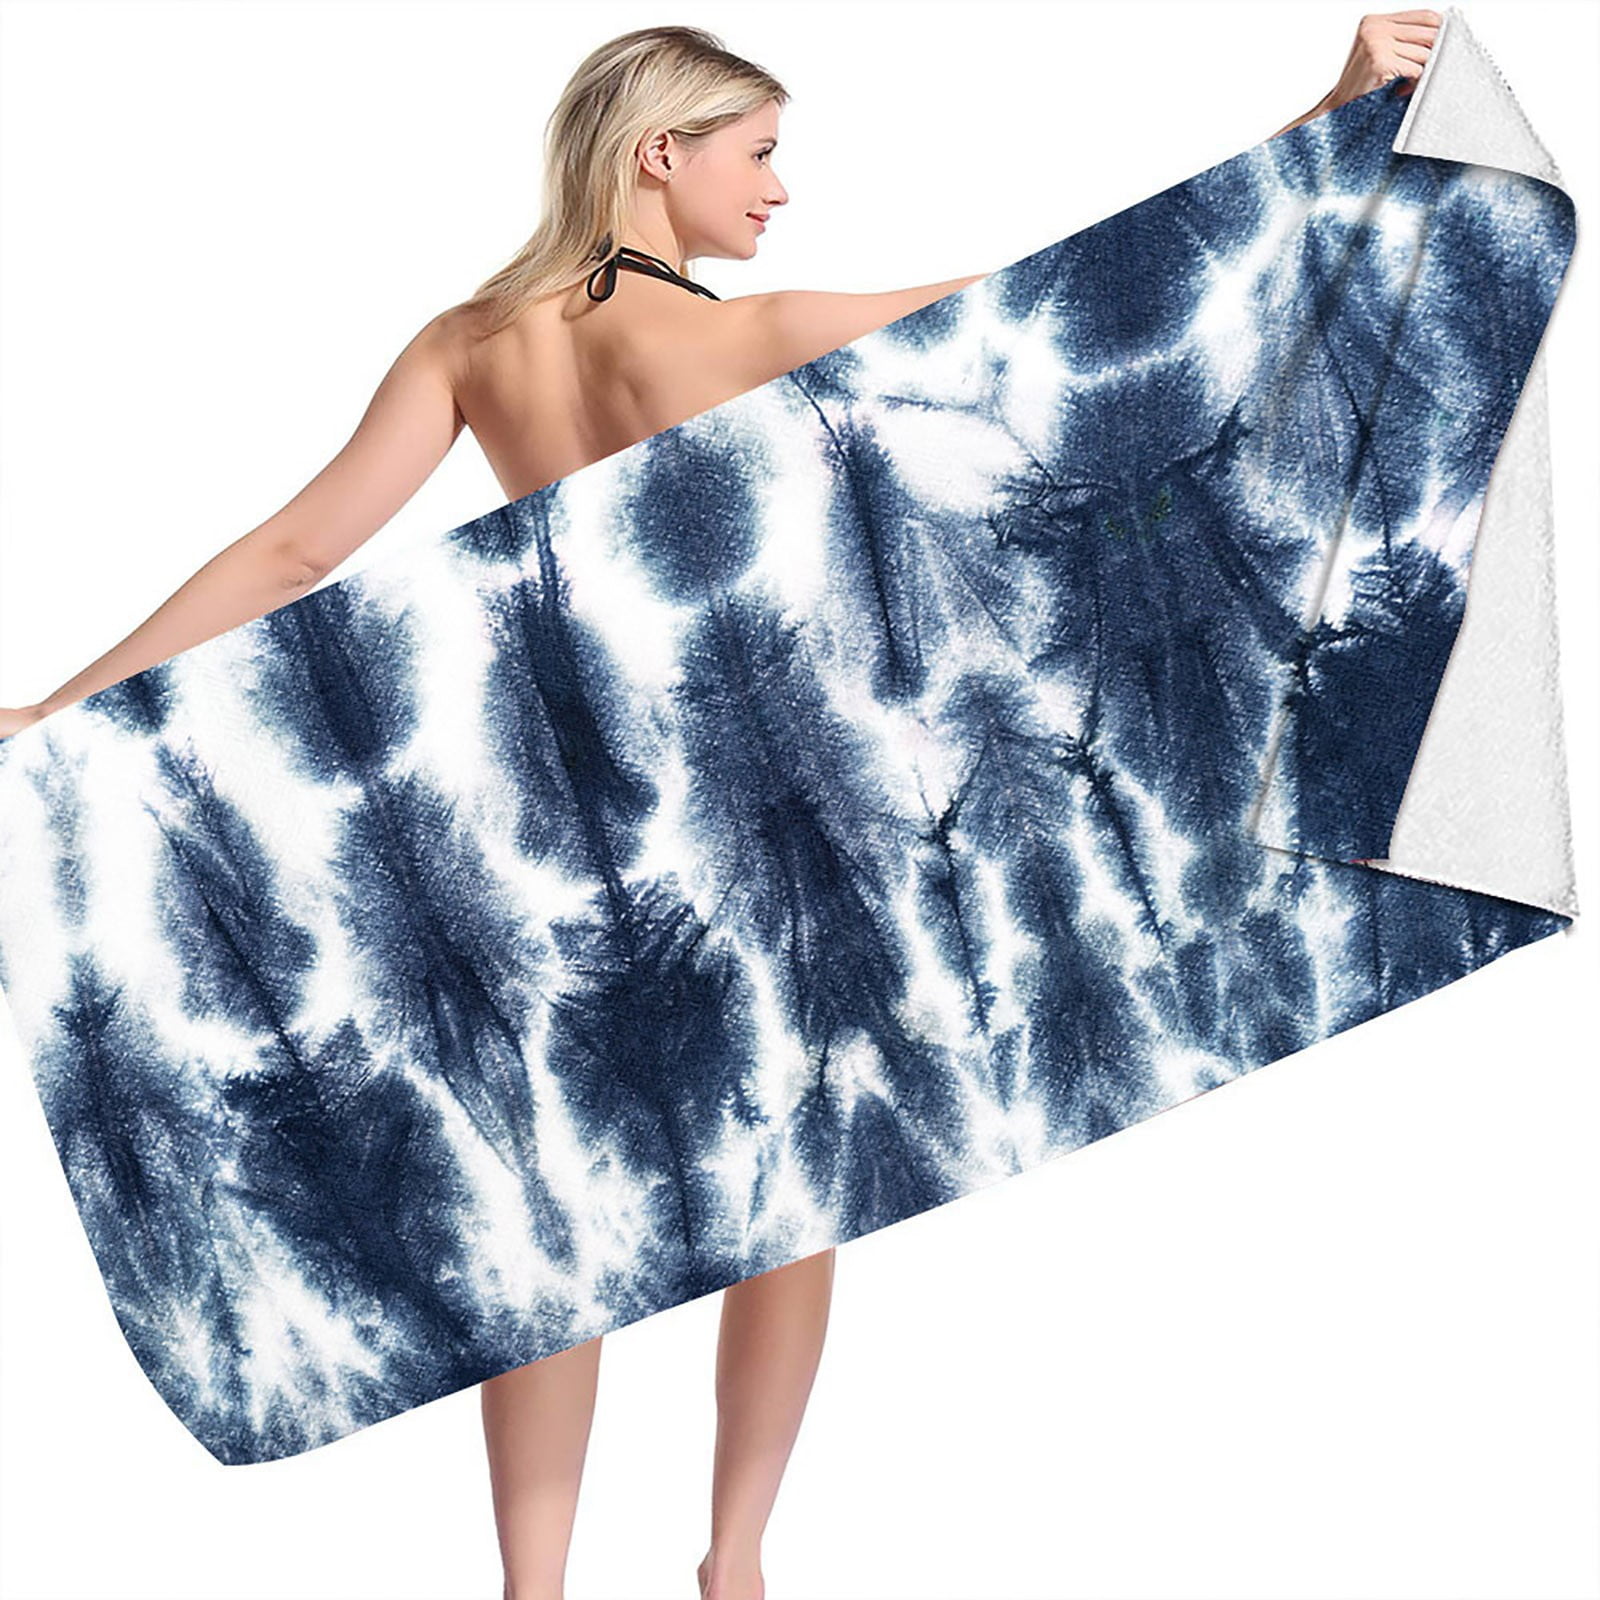 Clearance! EQWLJWE Microfiber Beach Towel Clearance Towels, 30”x60”, Stripe  Blue Cool Travel Pool Towel, Ideal Gift for Women Men, Mom Dad, Best